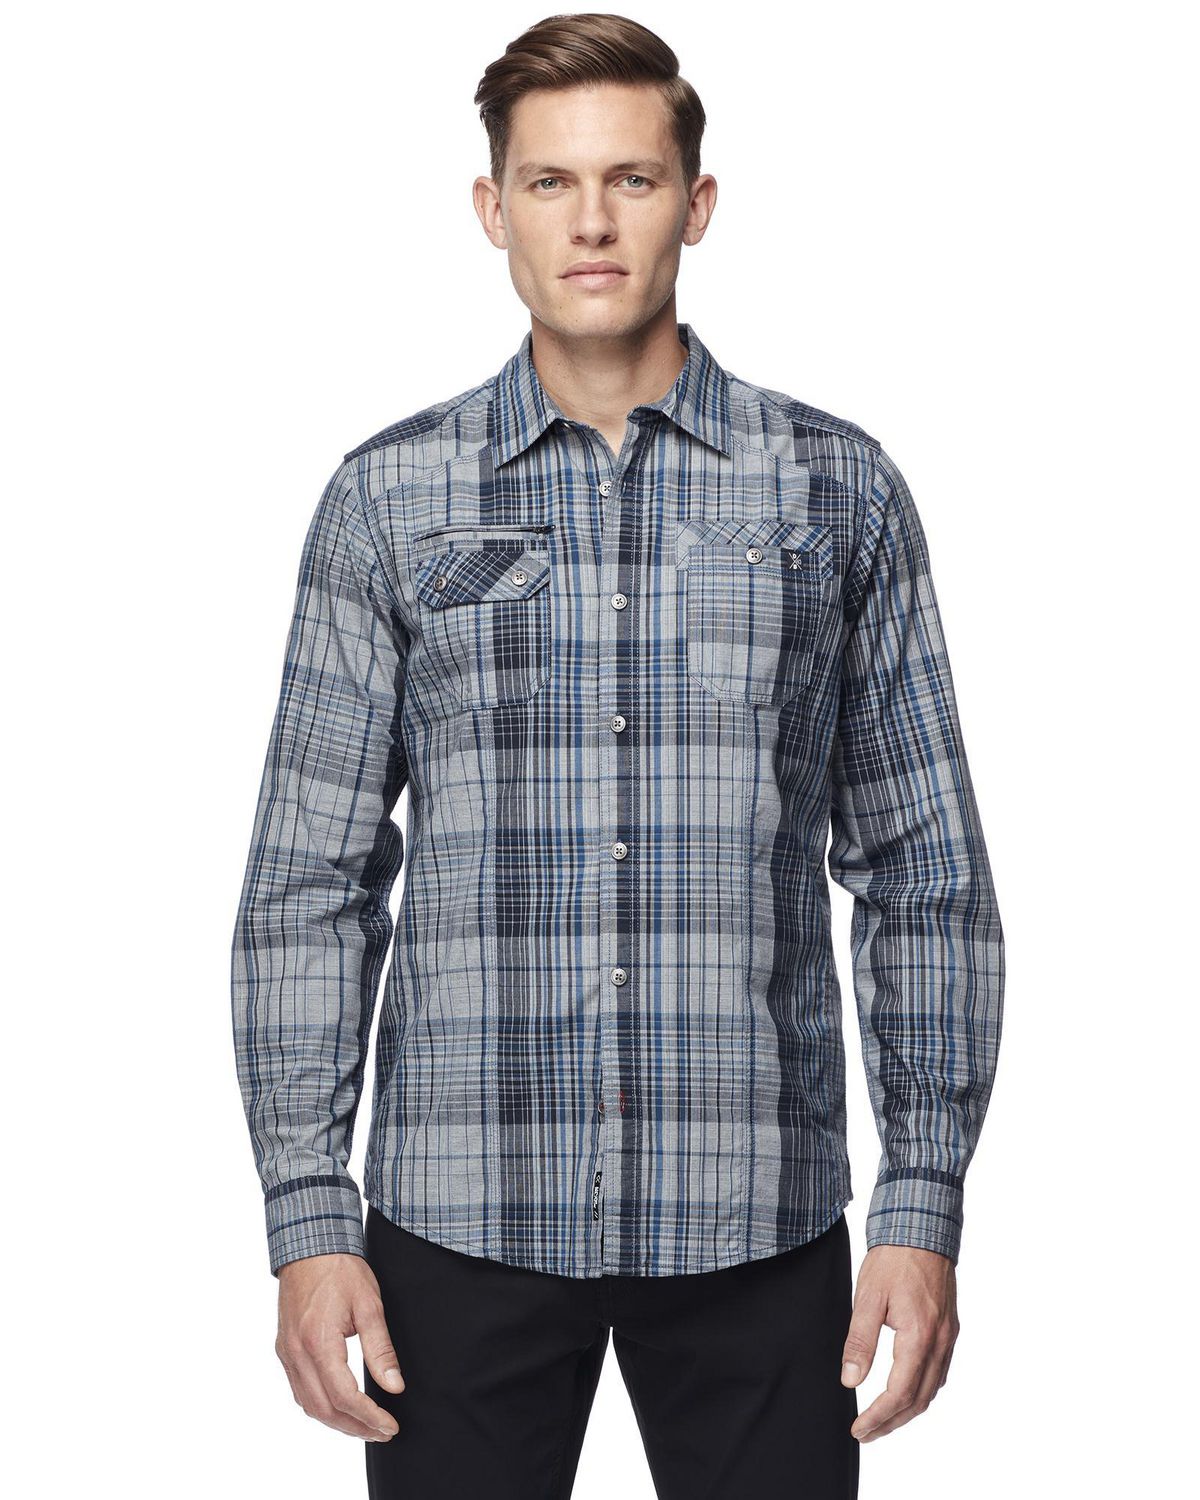 Dark Black Men's Long-Sleeve Plaid Shirt | Walmart Canada